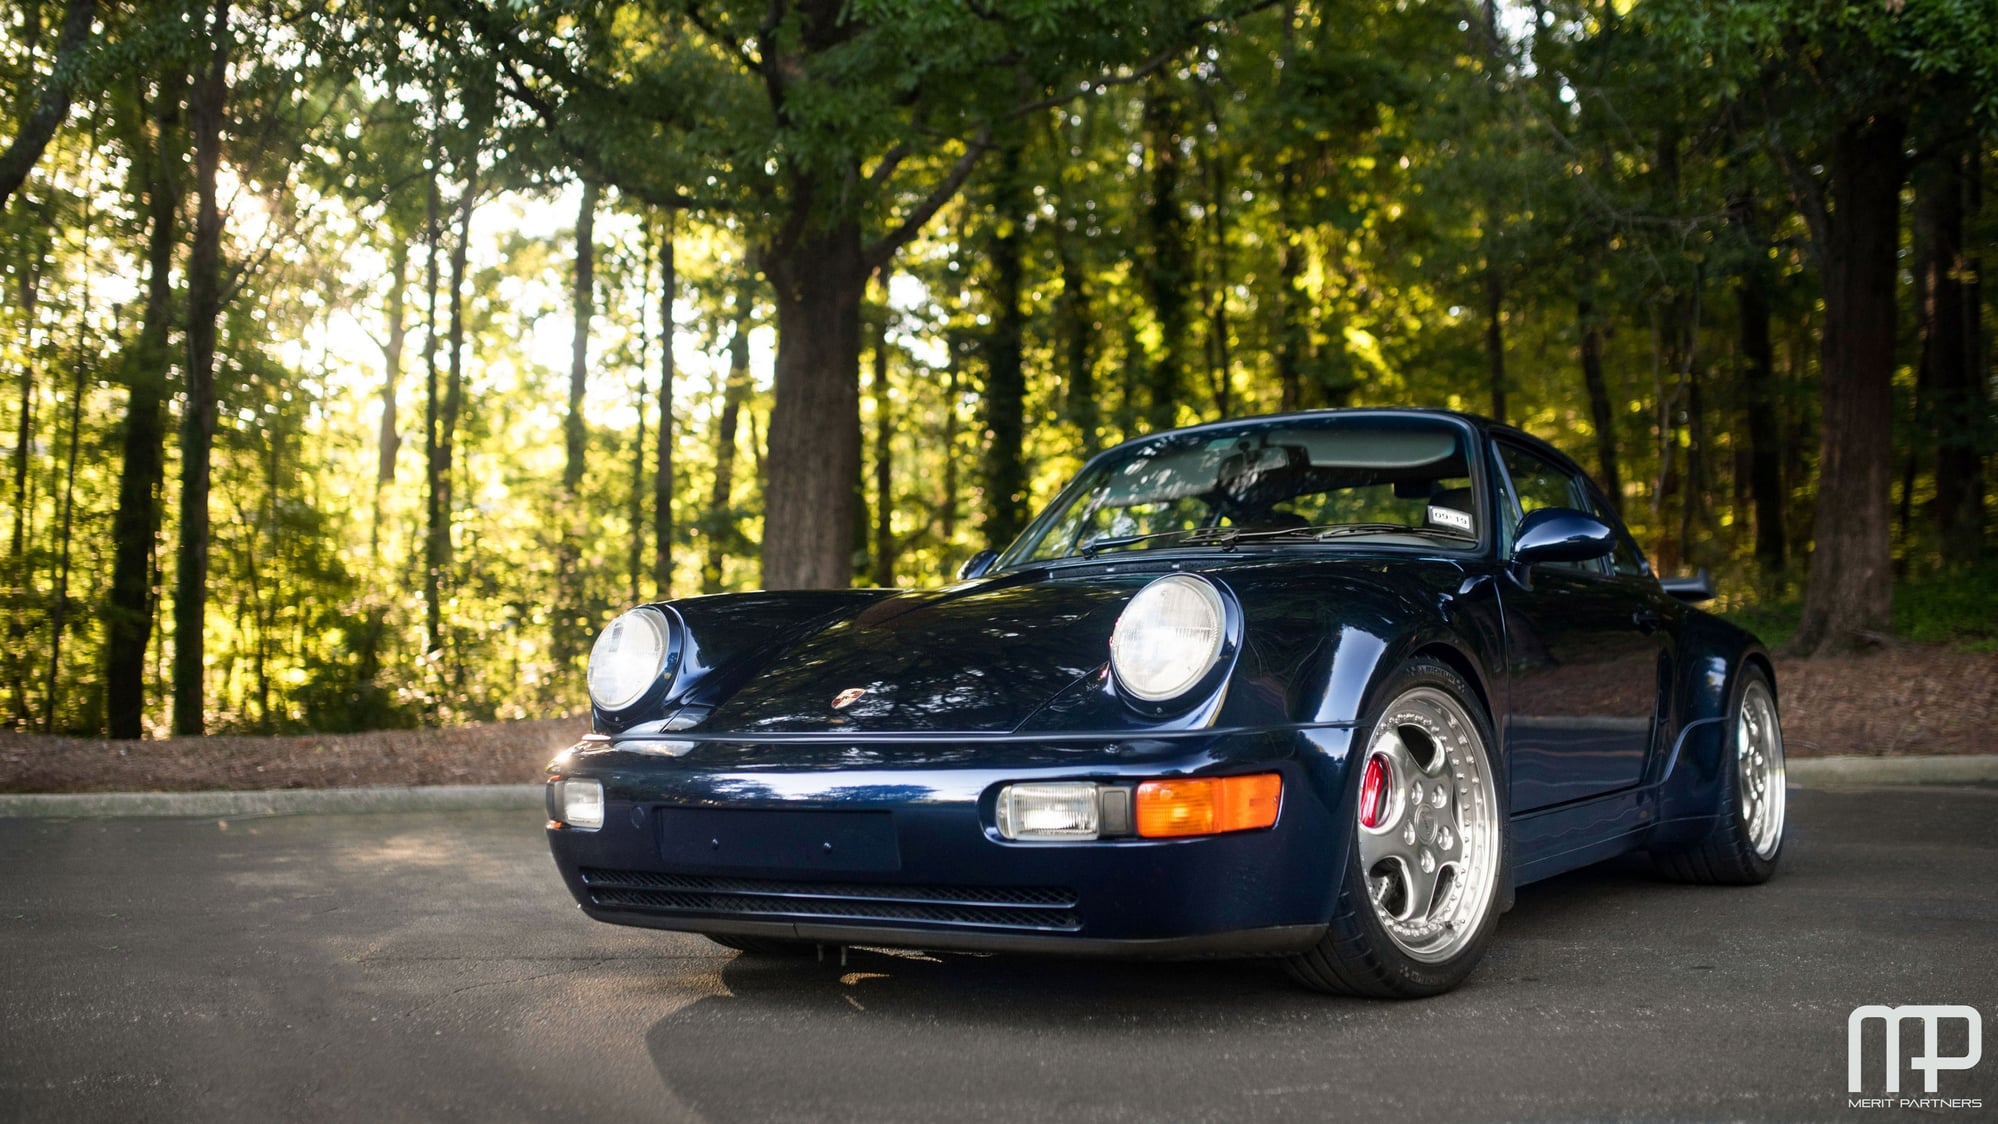 1994 Porsche 911 - 1994 Porsche 911 3.6 Turbo - Used - VIN WP0AC2966RS480285 - 36,600 Miles - 6 cyl - 2WD - Manual - Coupe - Blue - Atlanta, GA 30360, United States